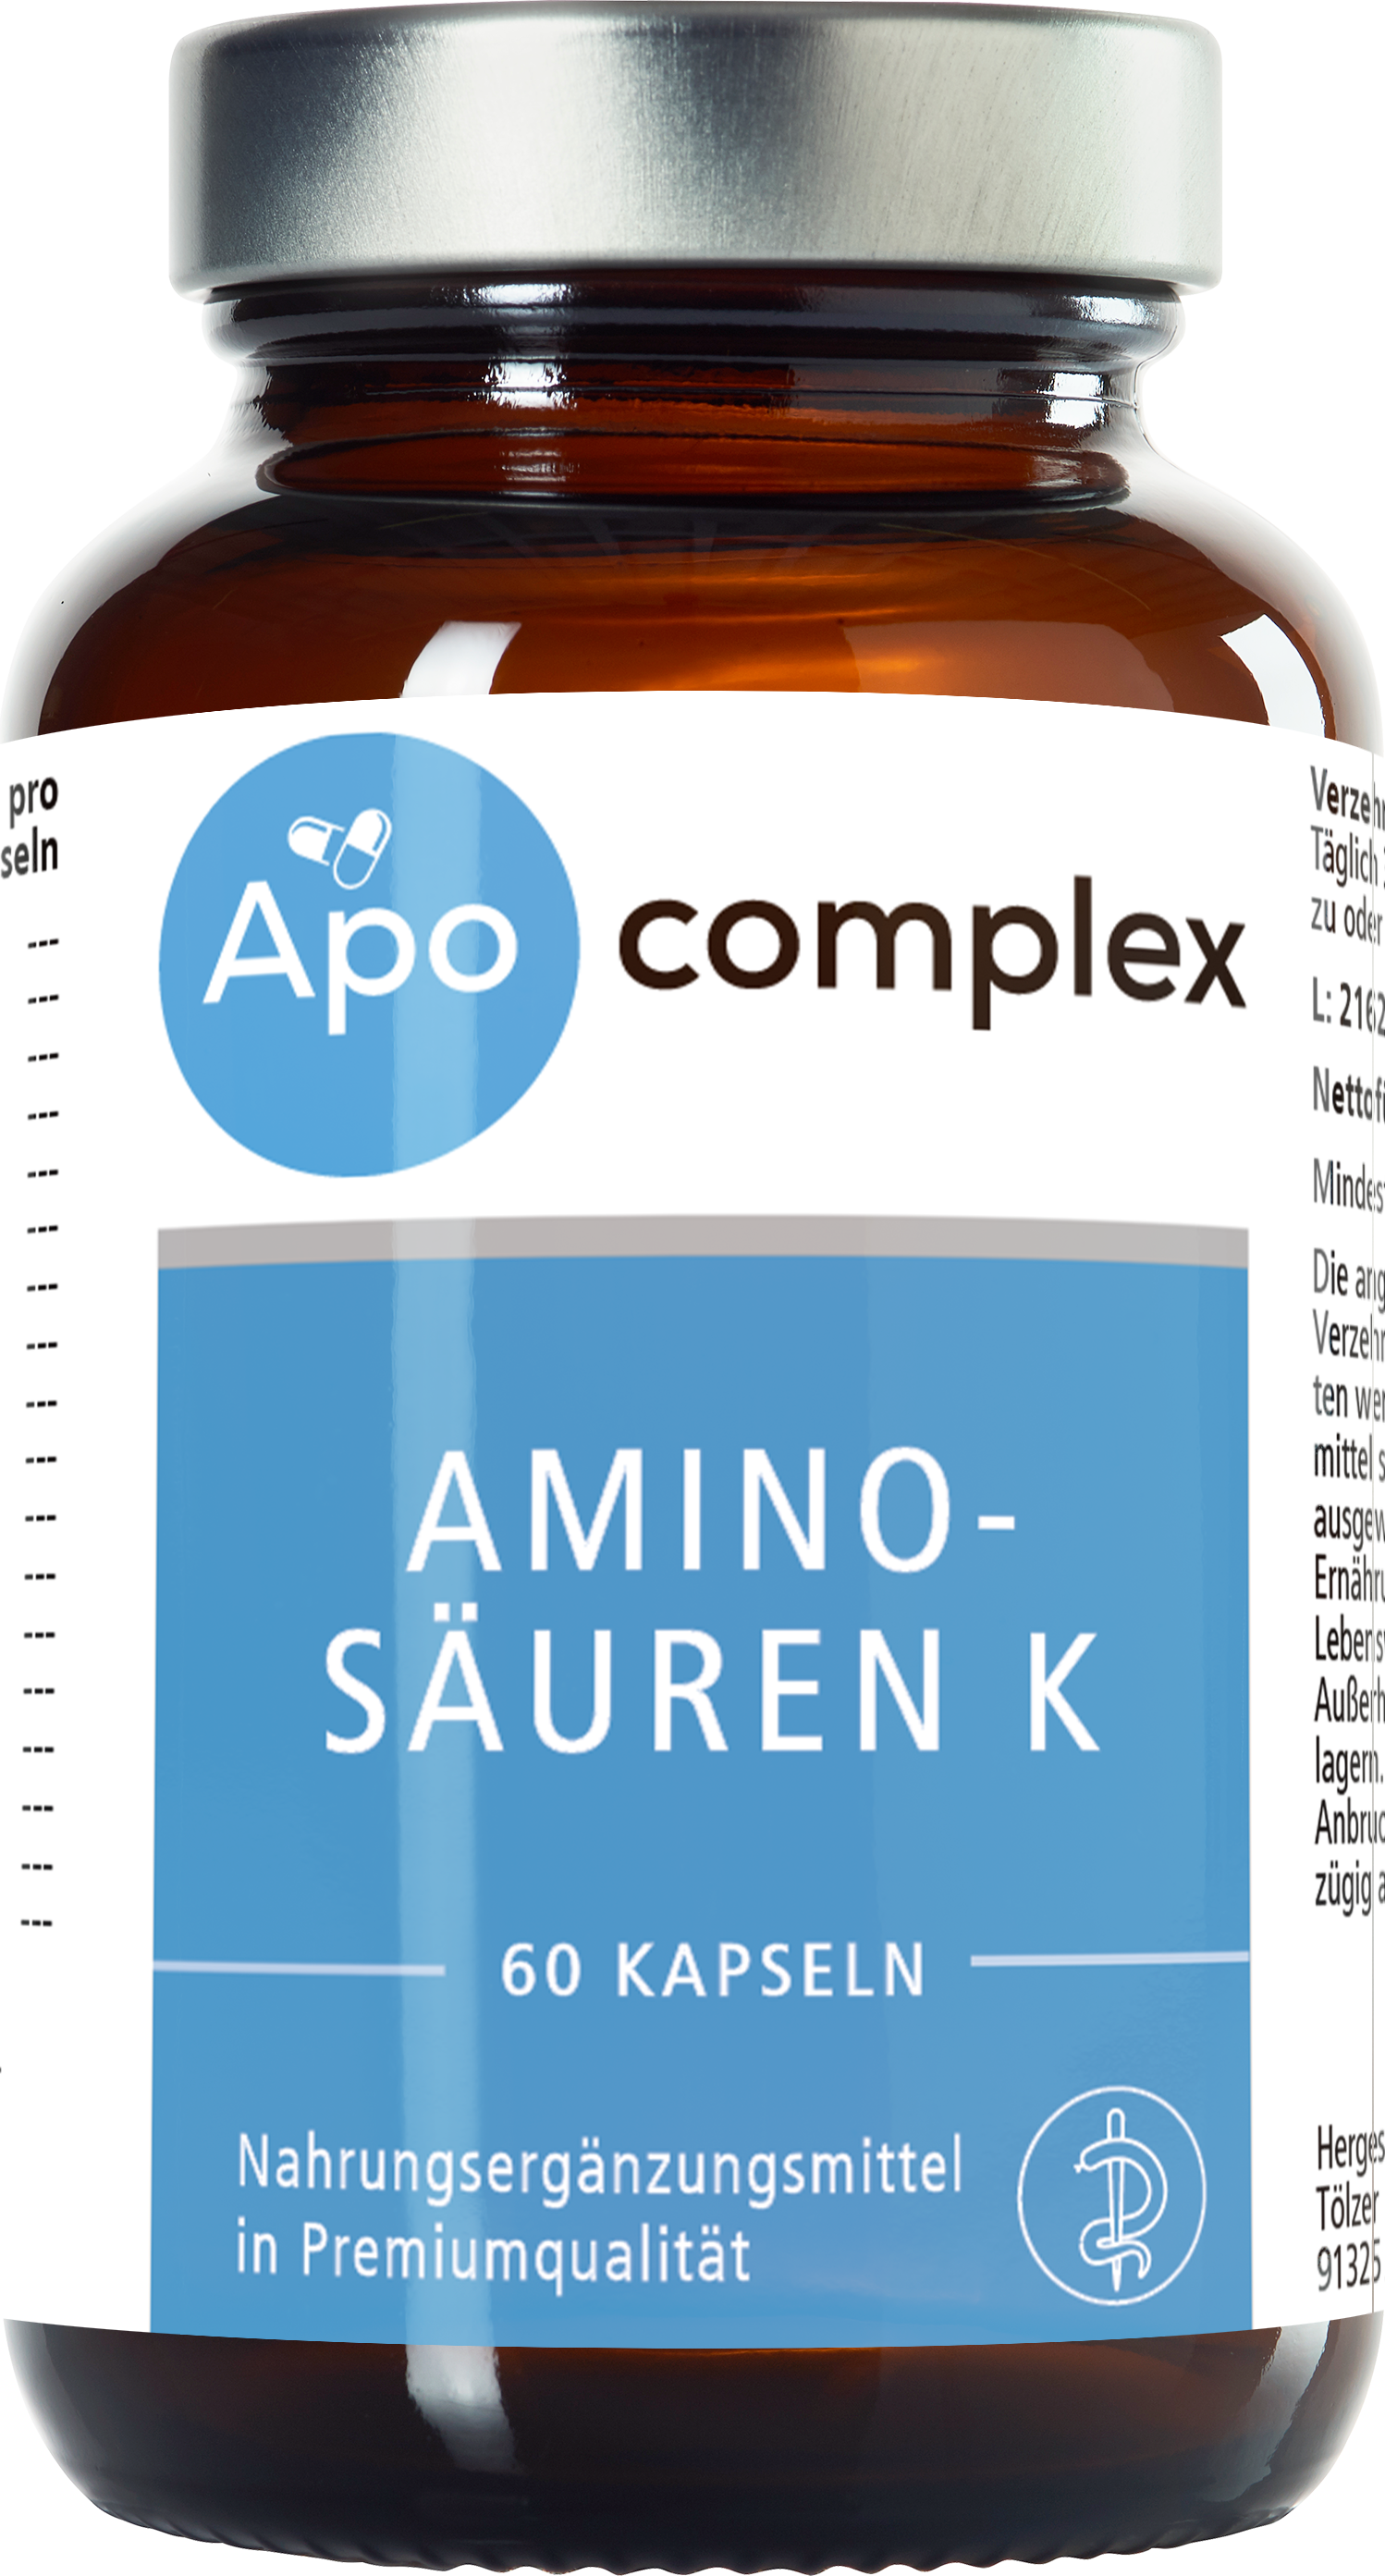 Apocomplex AMINOSÄUREN K